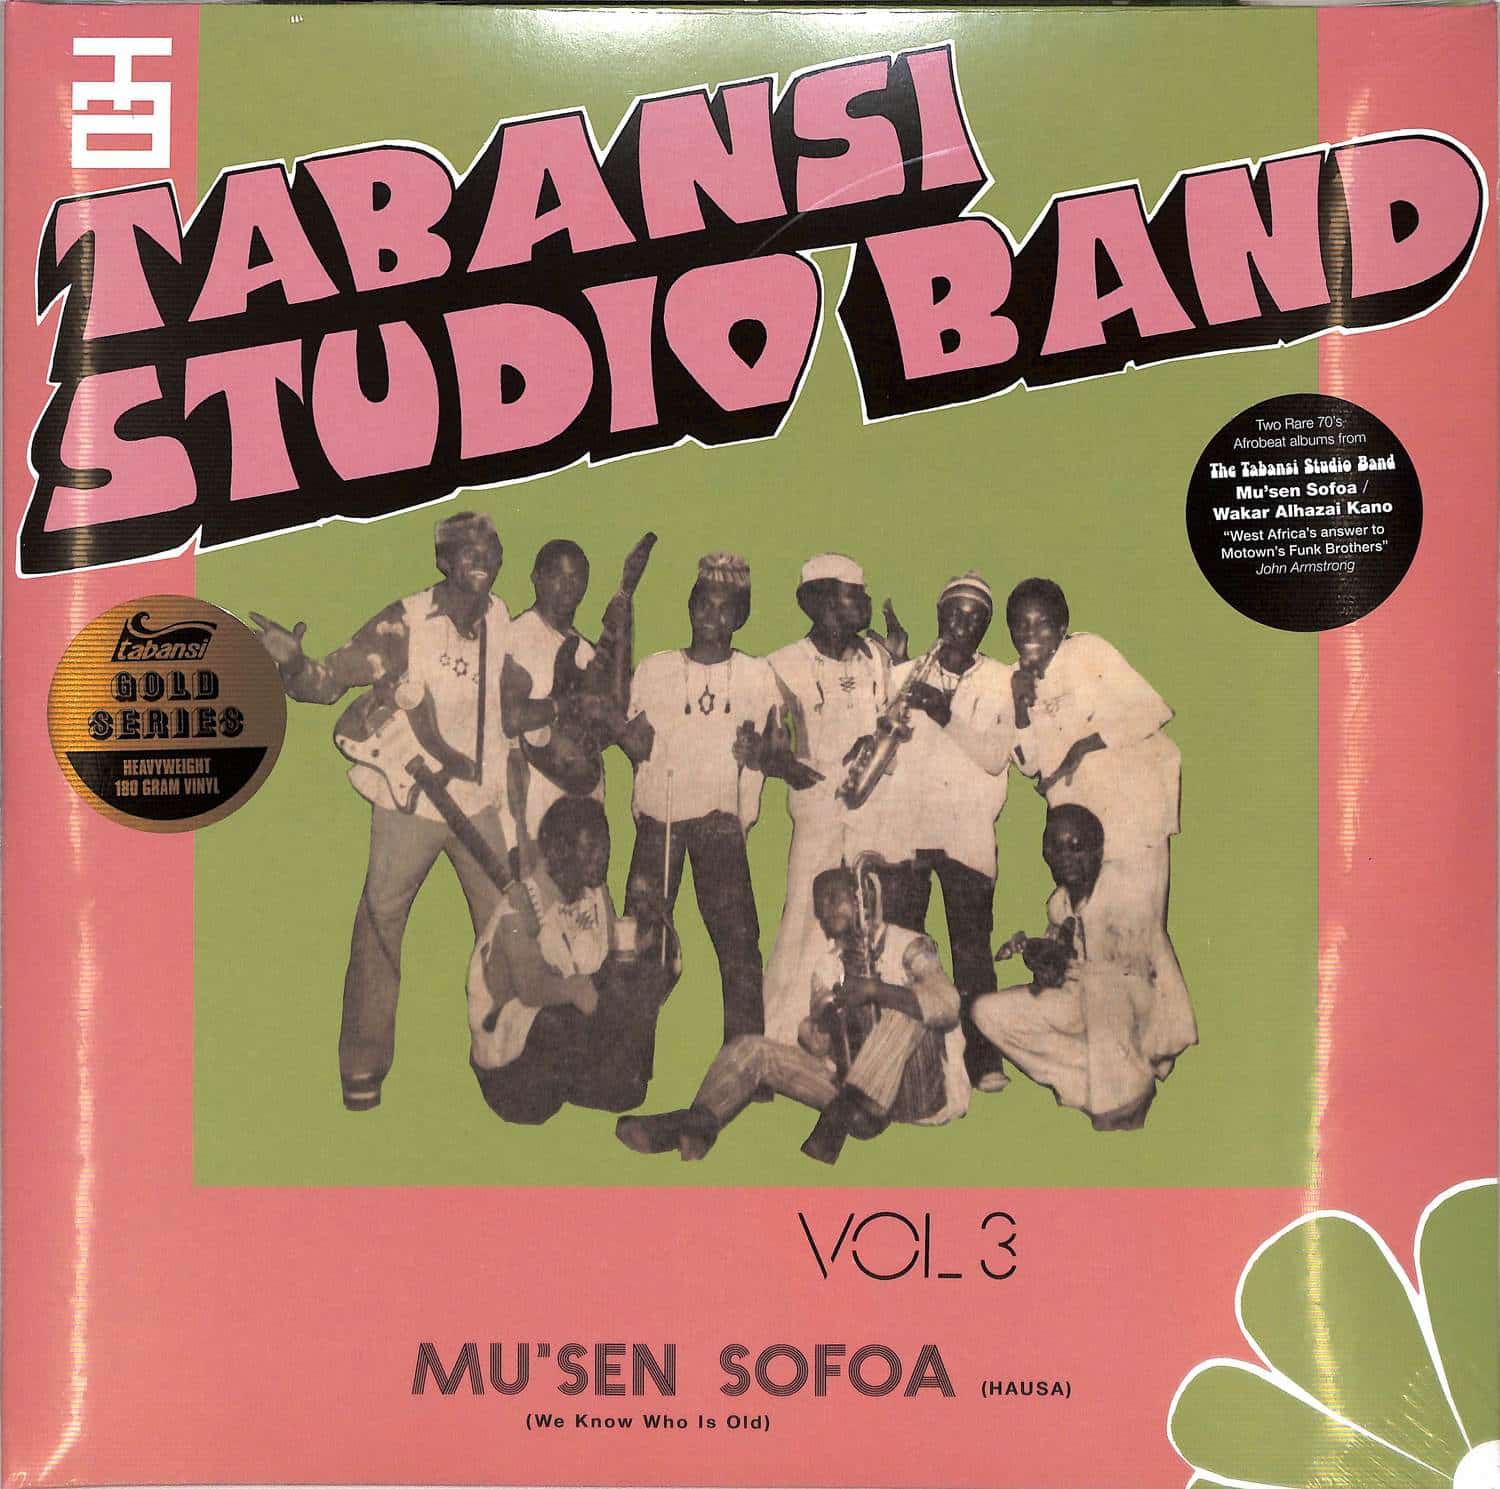 Tabansi Studio Band - WAKAR ALHAZAI KANO / MUSEN SOFOA 